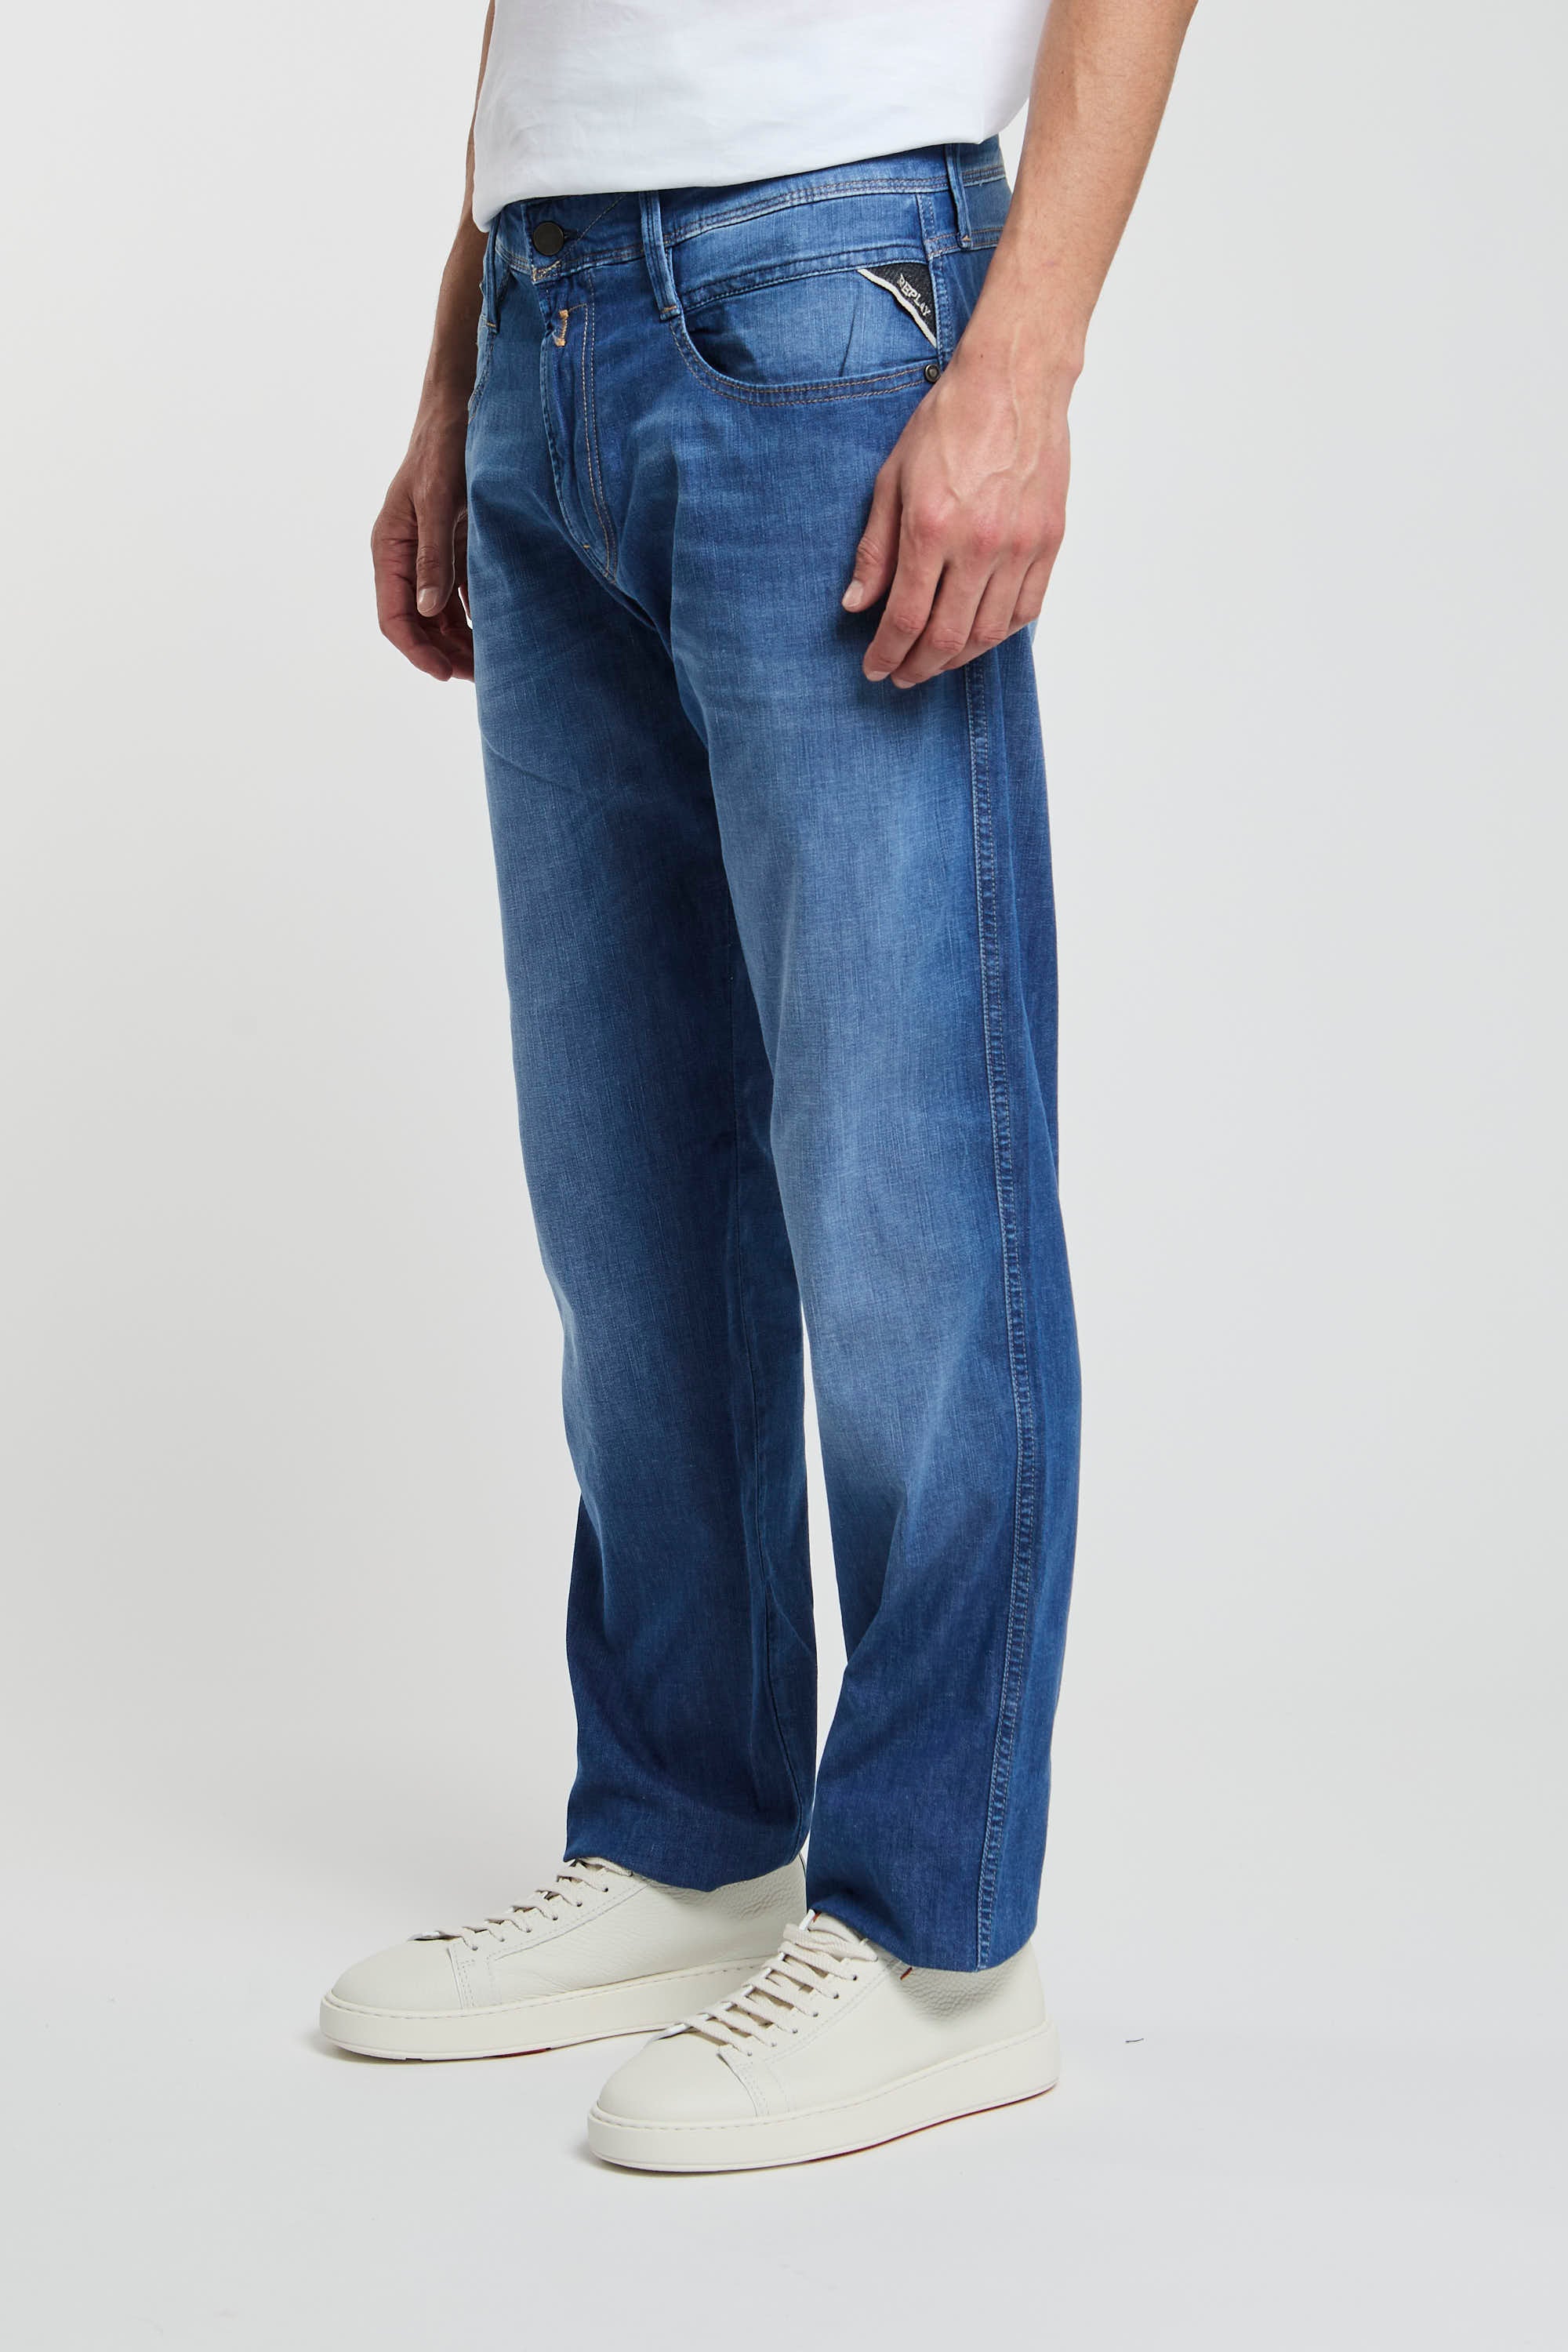 Replay Slim Fit Jeans Denim Made of Cotton/Lyocell/Elastomultiester/Elastane-4